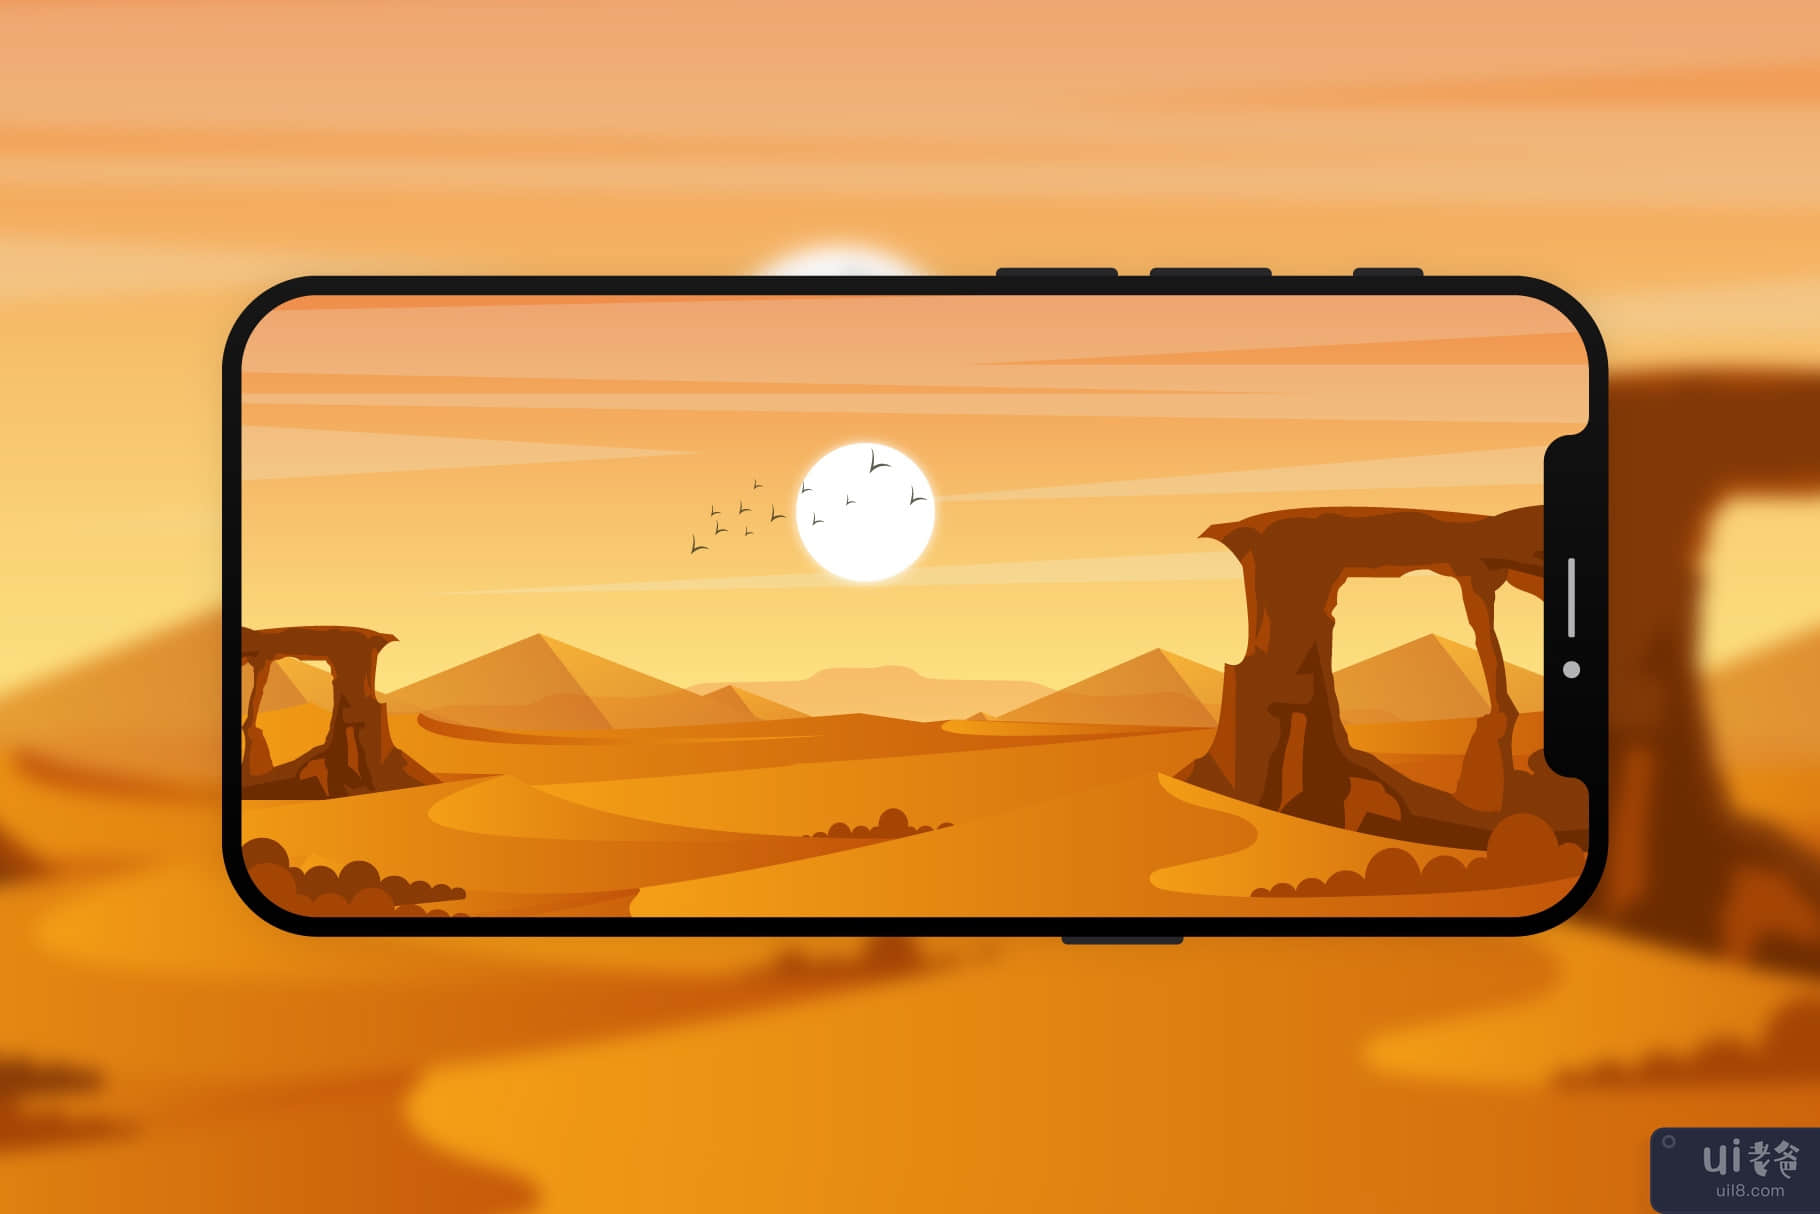 15 个沙漠背景插图(15 Desert Backgrounds Illustrations)插图5